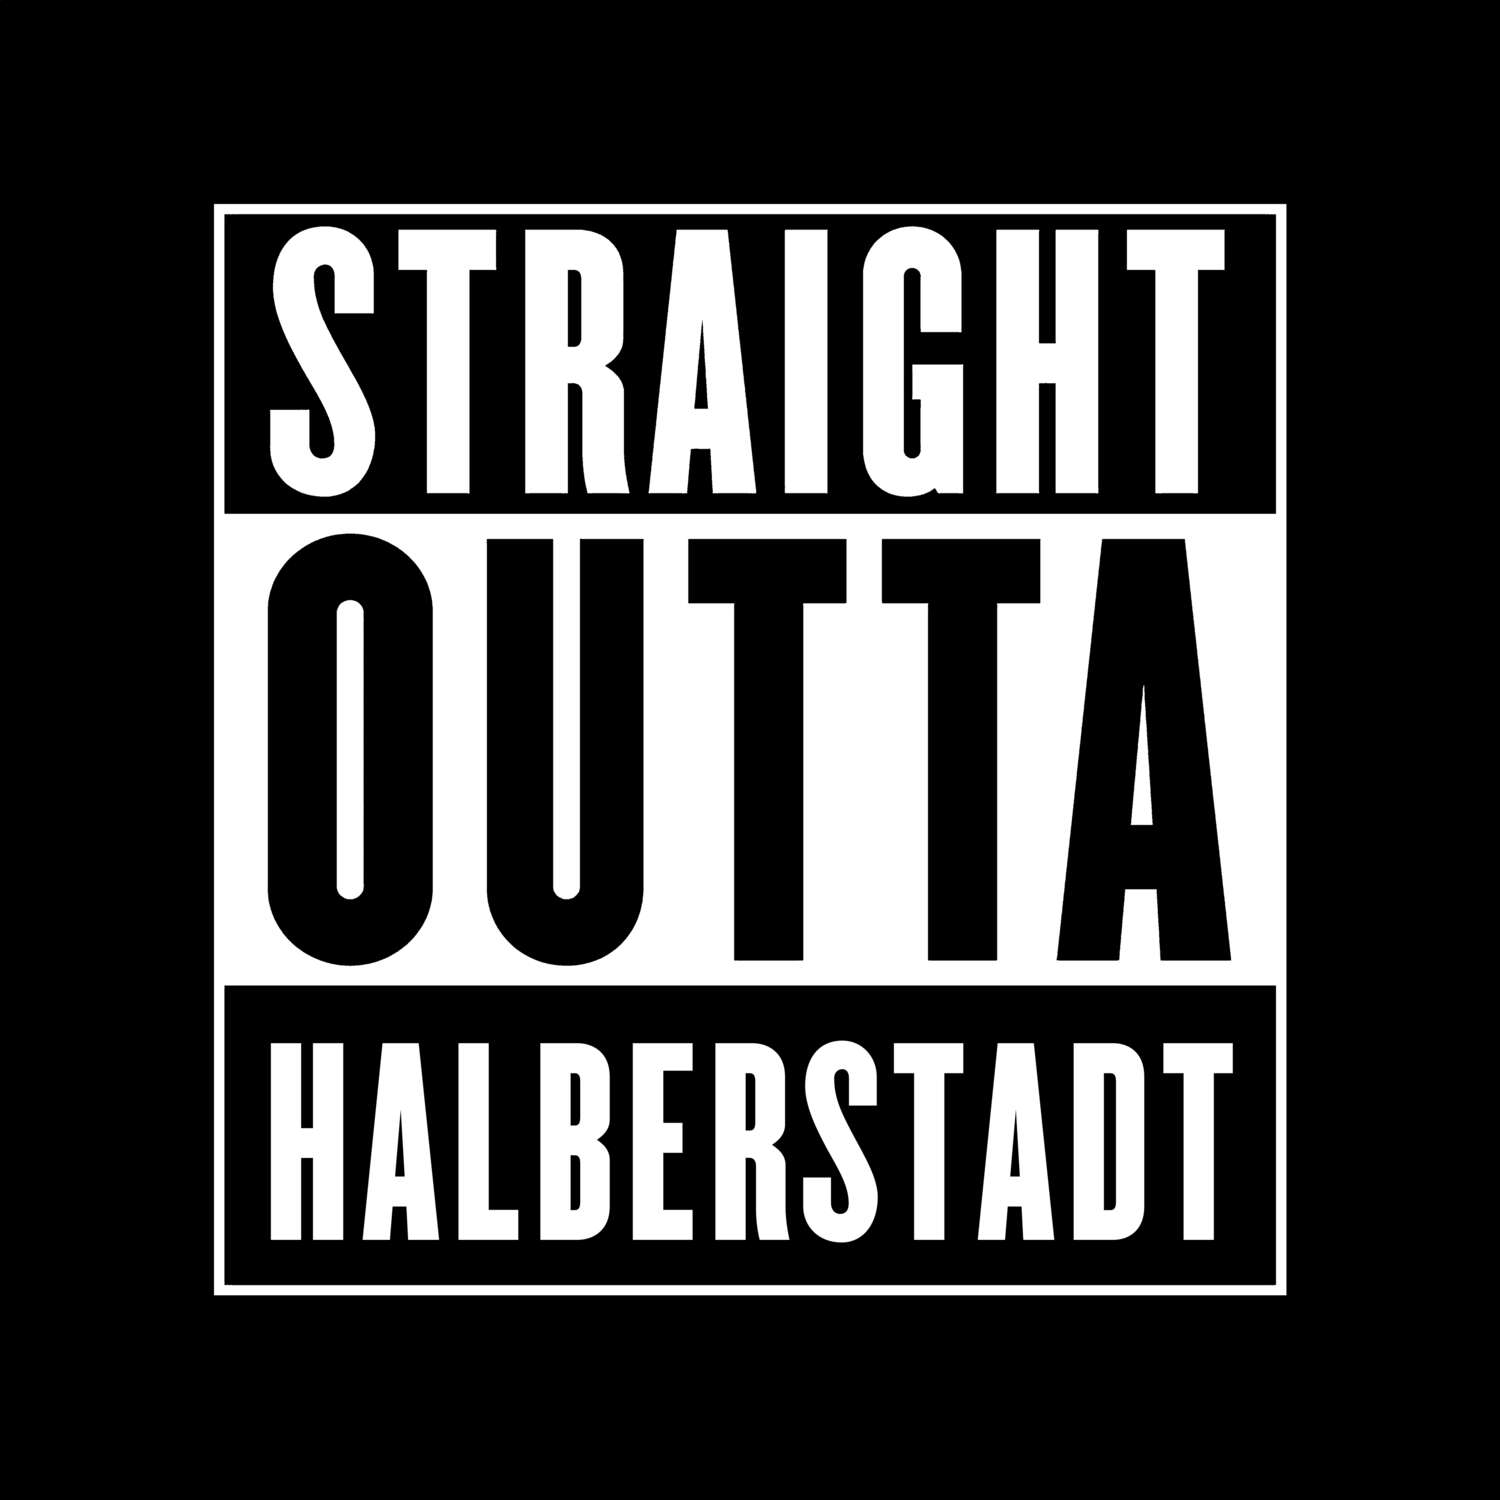 Halberstadt T-Shirt »Straight Outta«